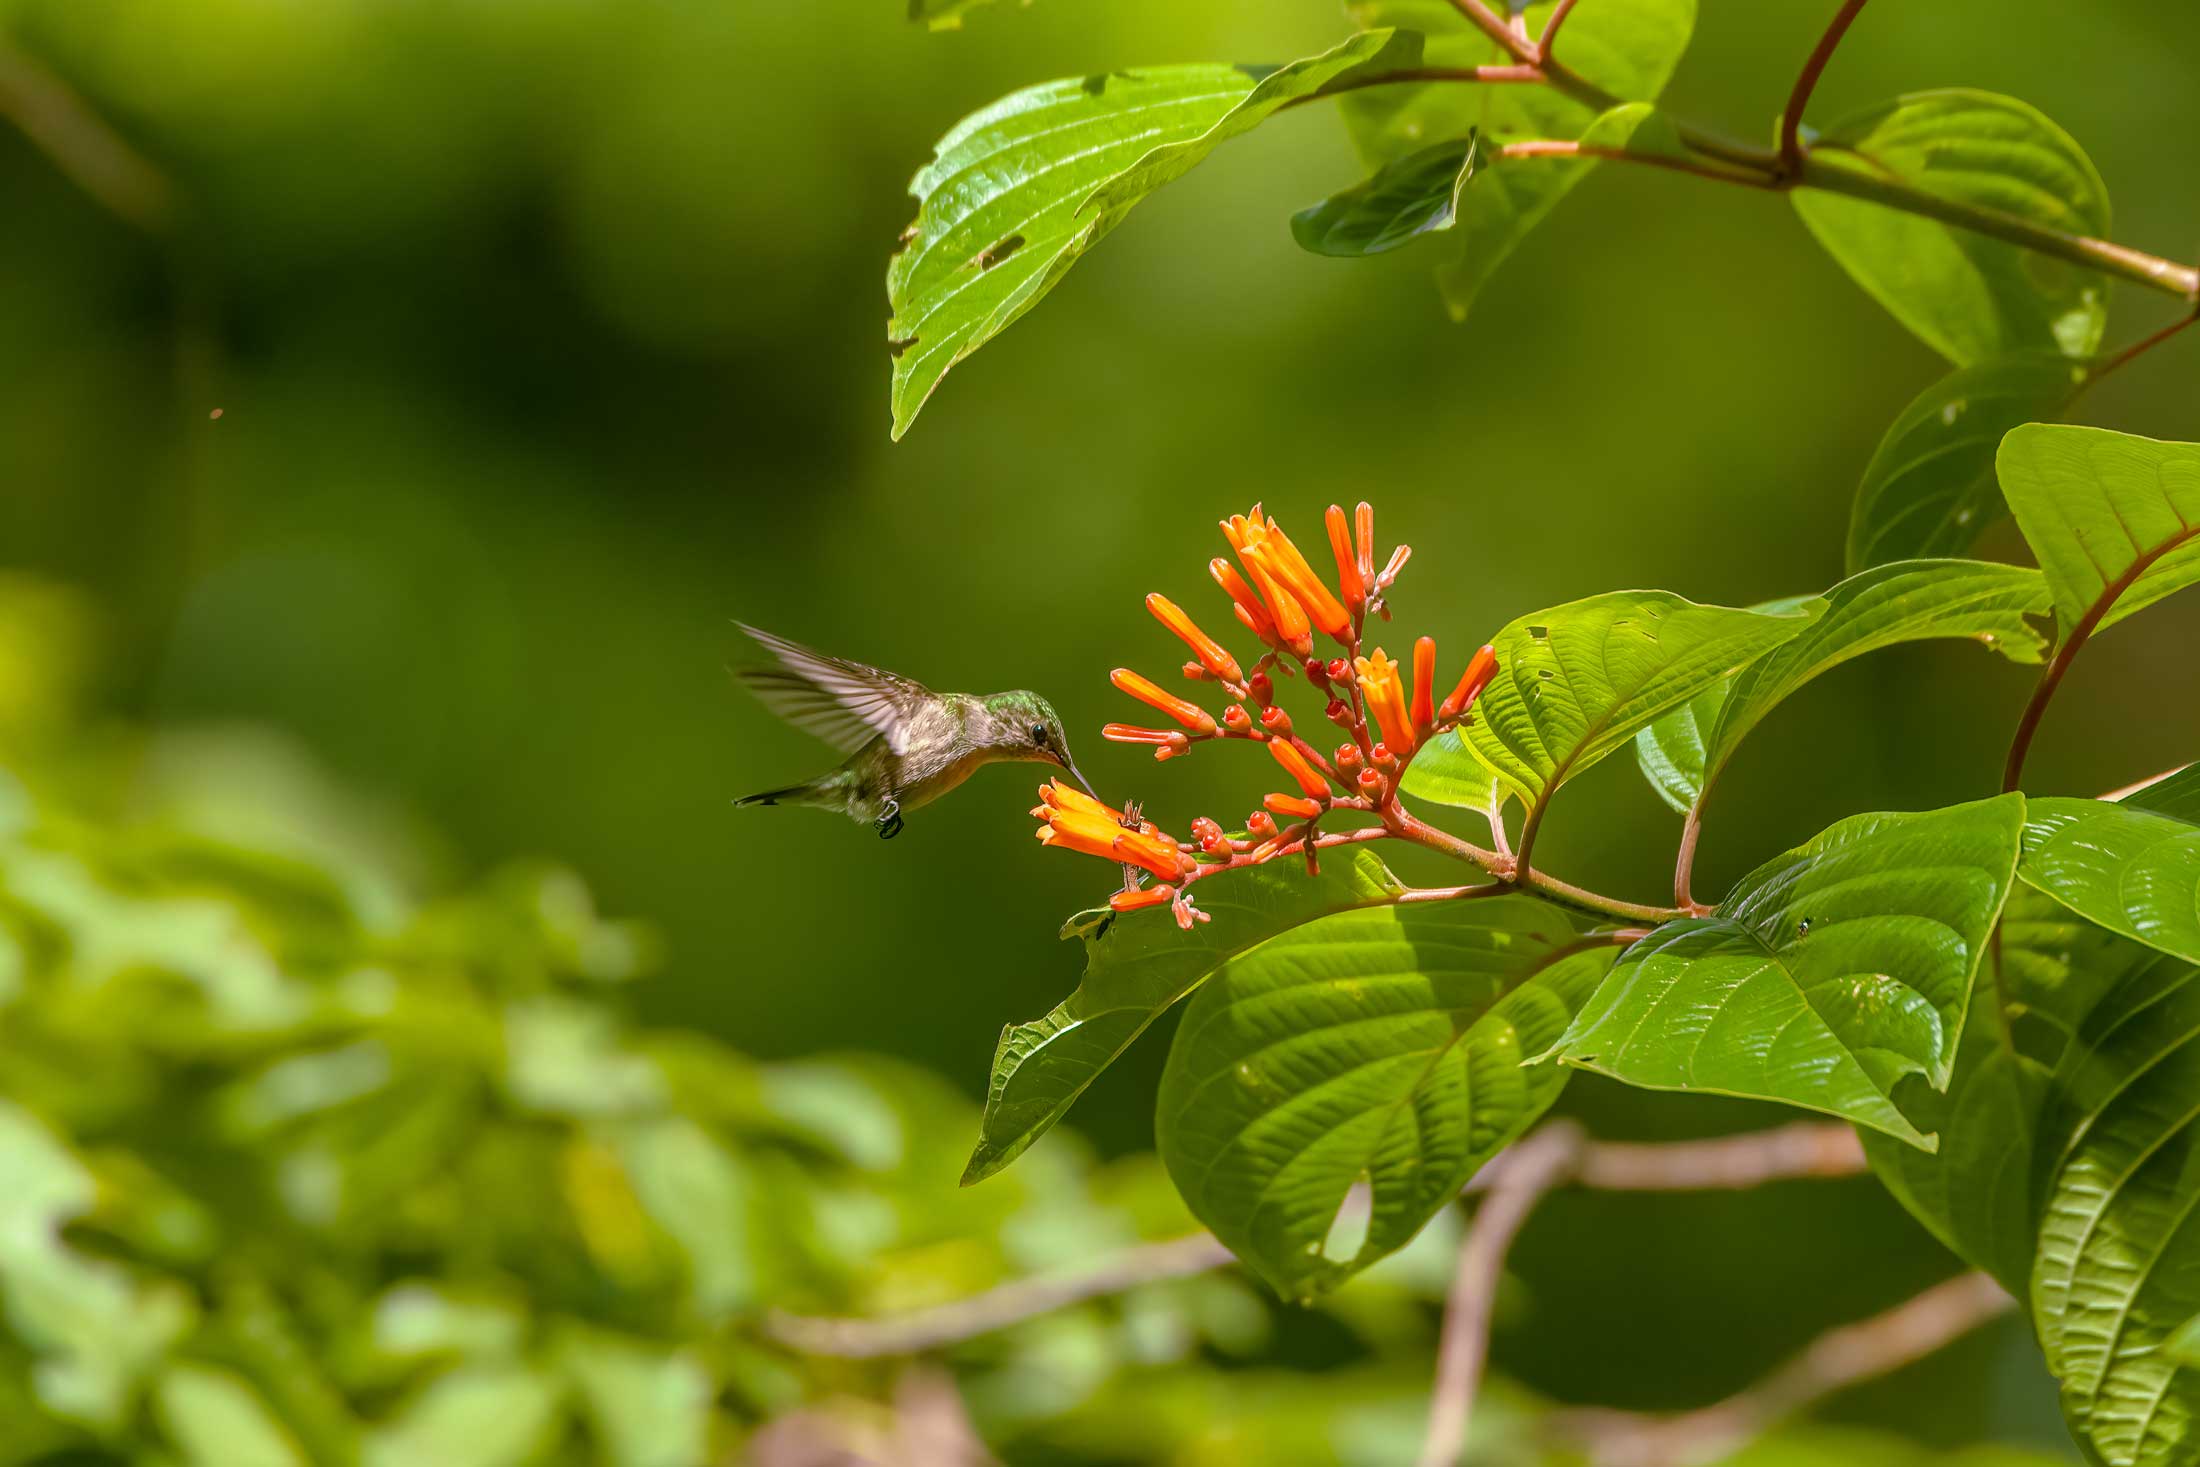 Tiny hummingbird feeding from flower buds.